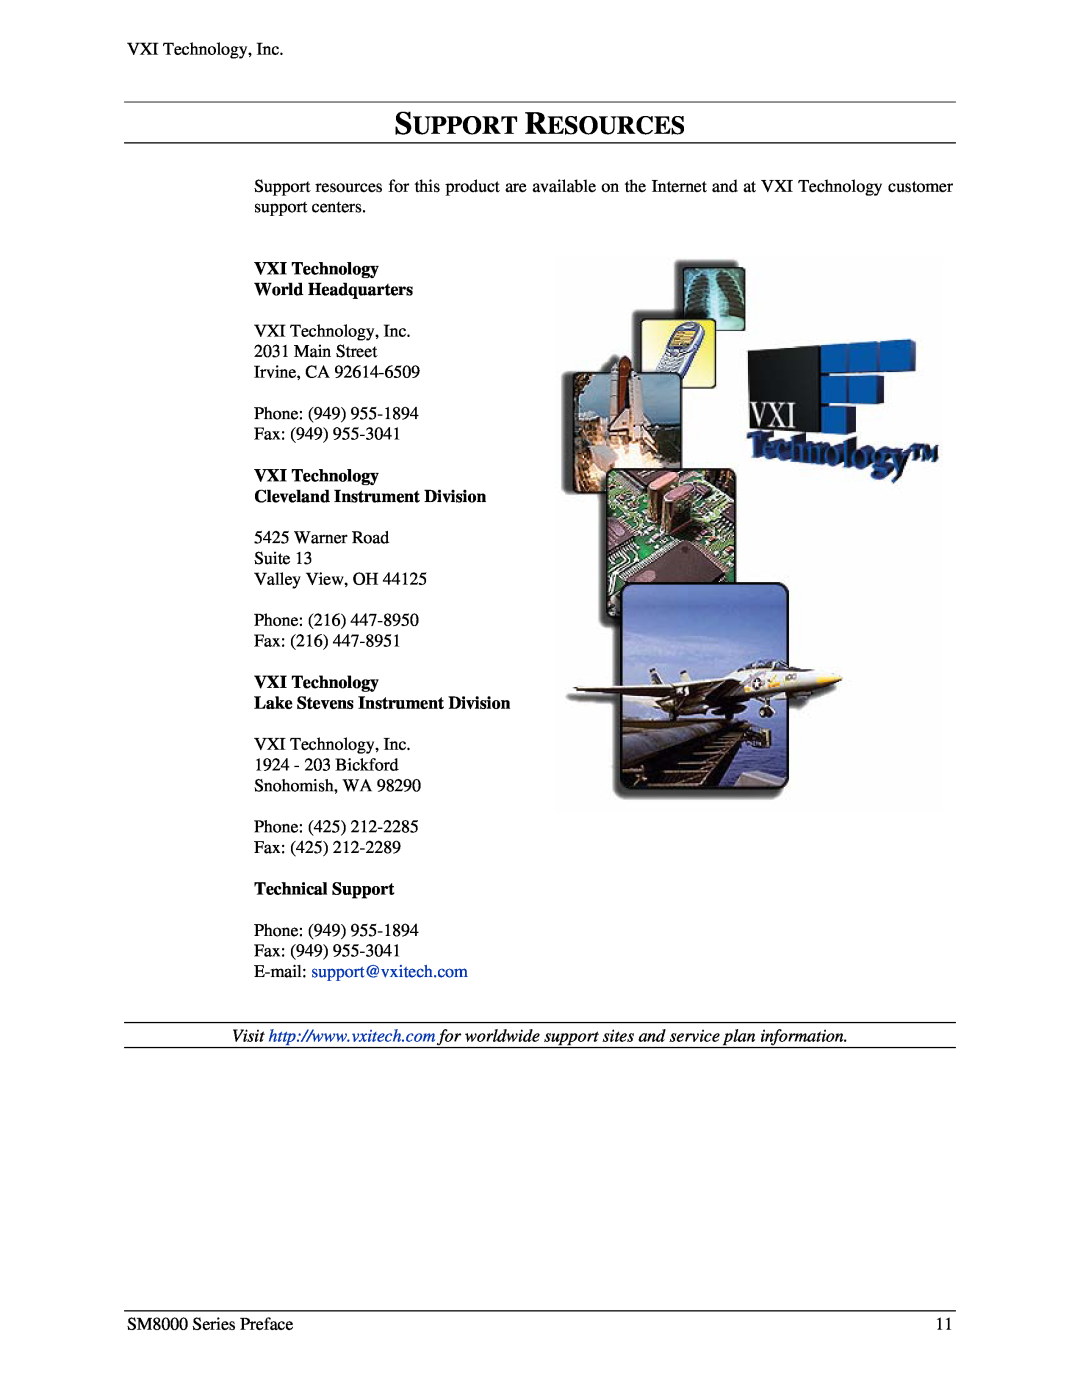 VXI SM8000 user manual Support Resources, VXI Technology World Headquarters, VXI Technology Cleveland Instrument Division 